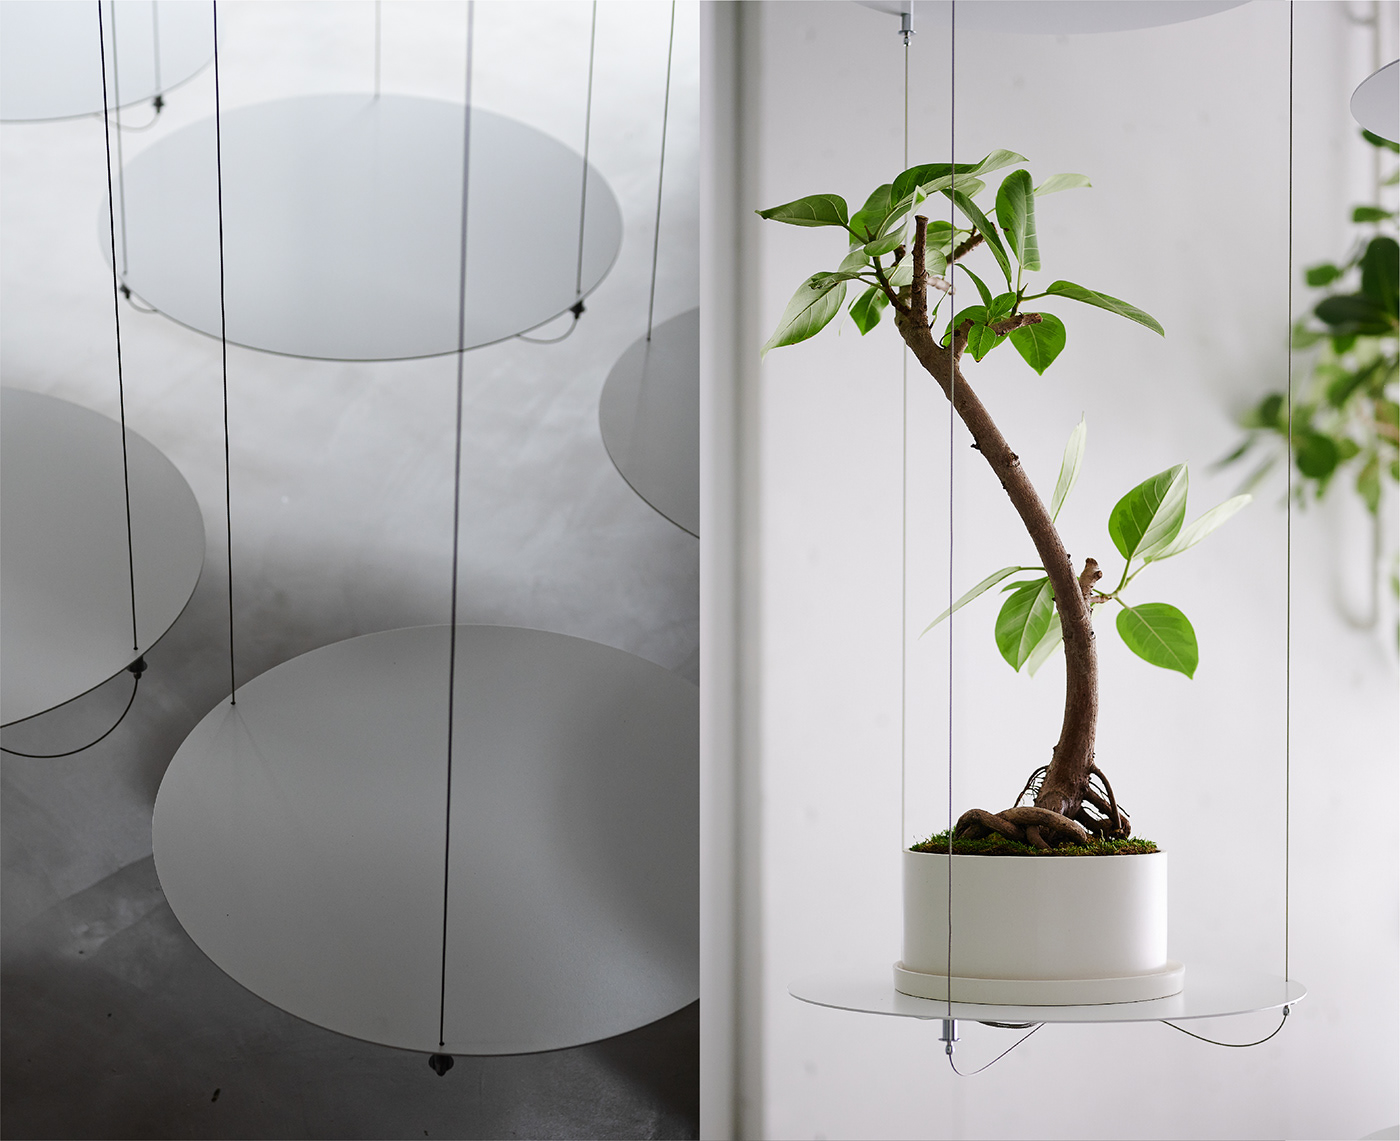 display design Displays Interior nosigner plants Space design furniture japan product product design 